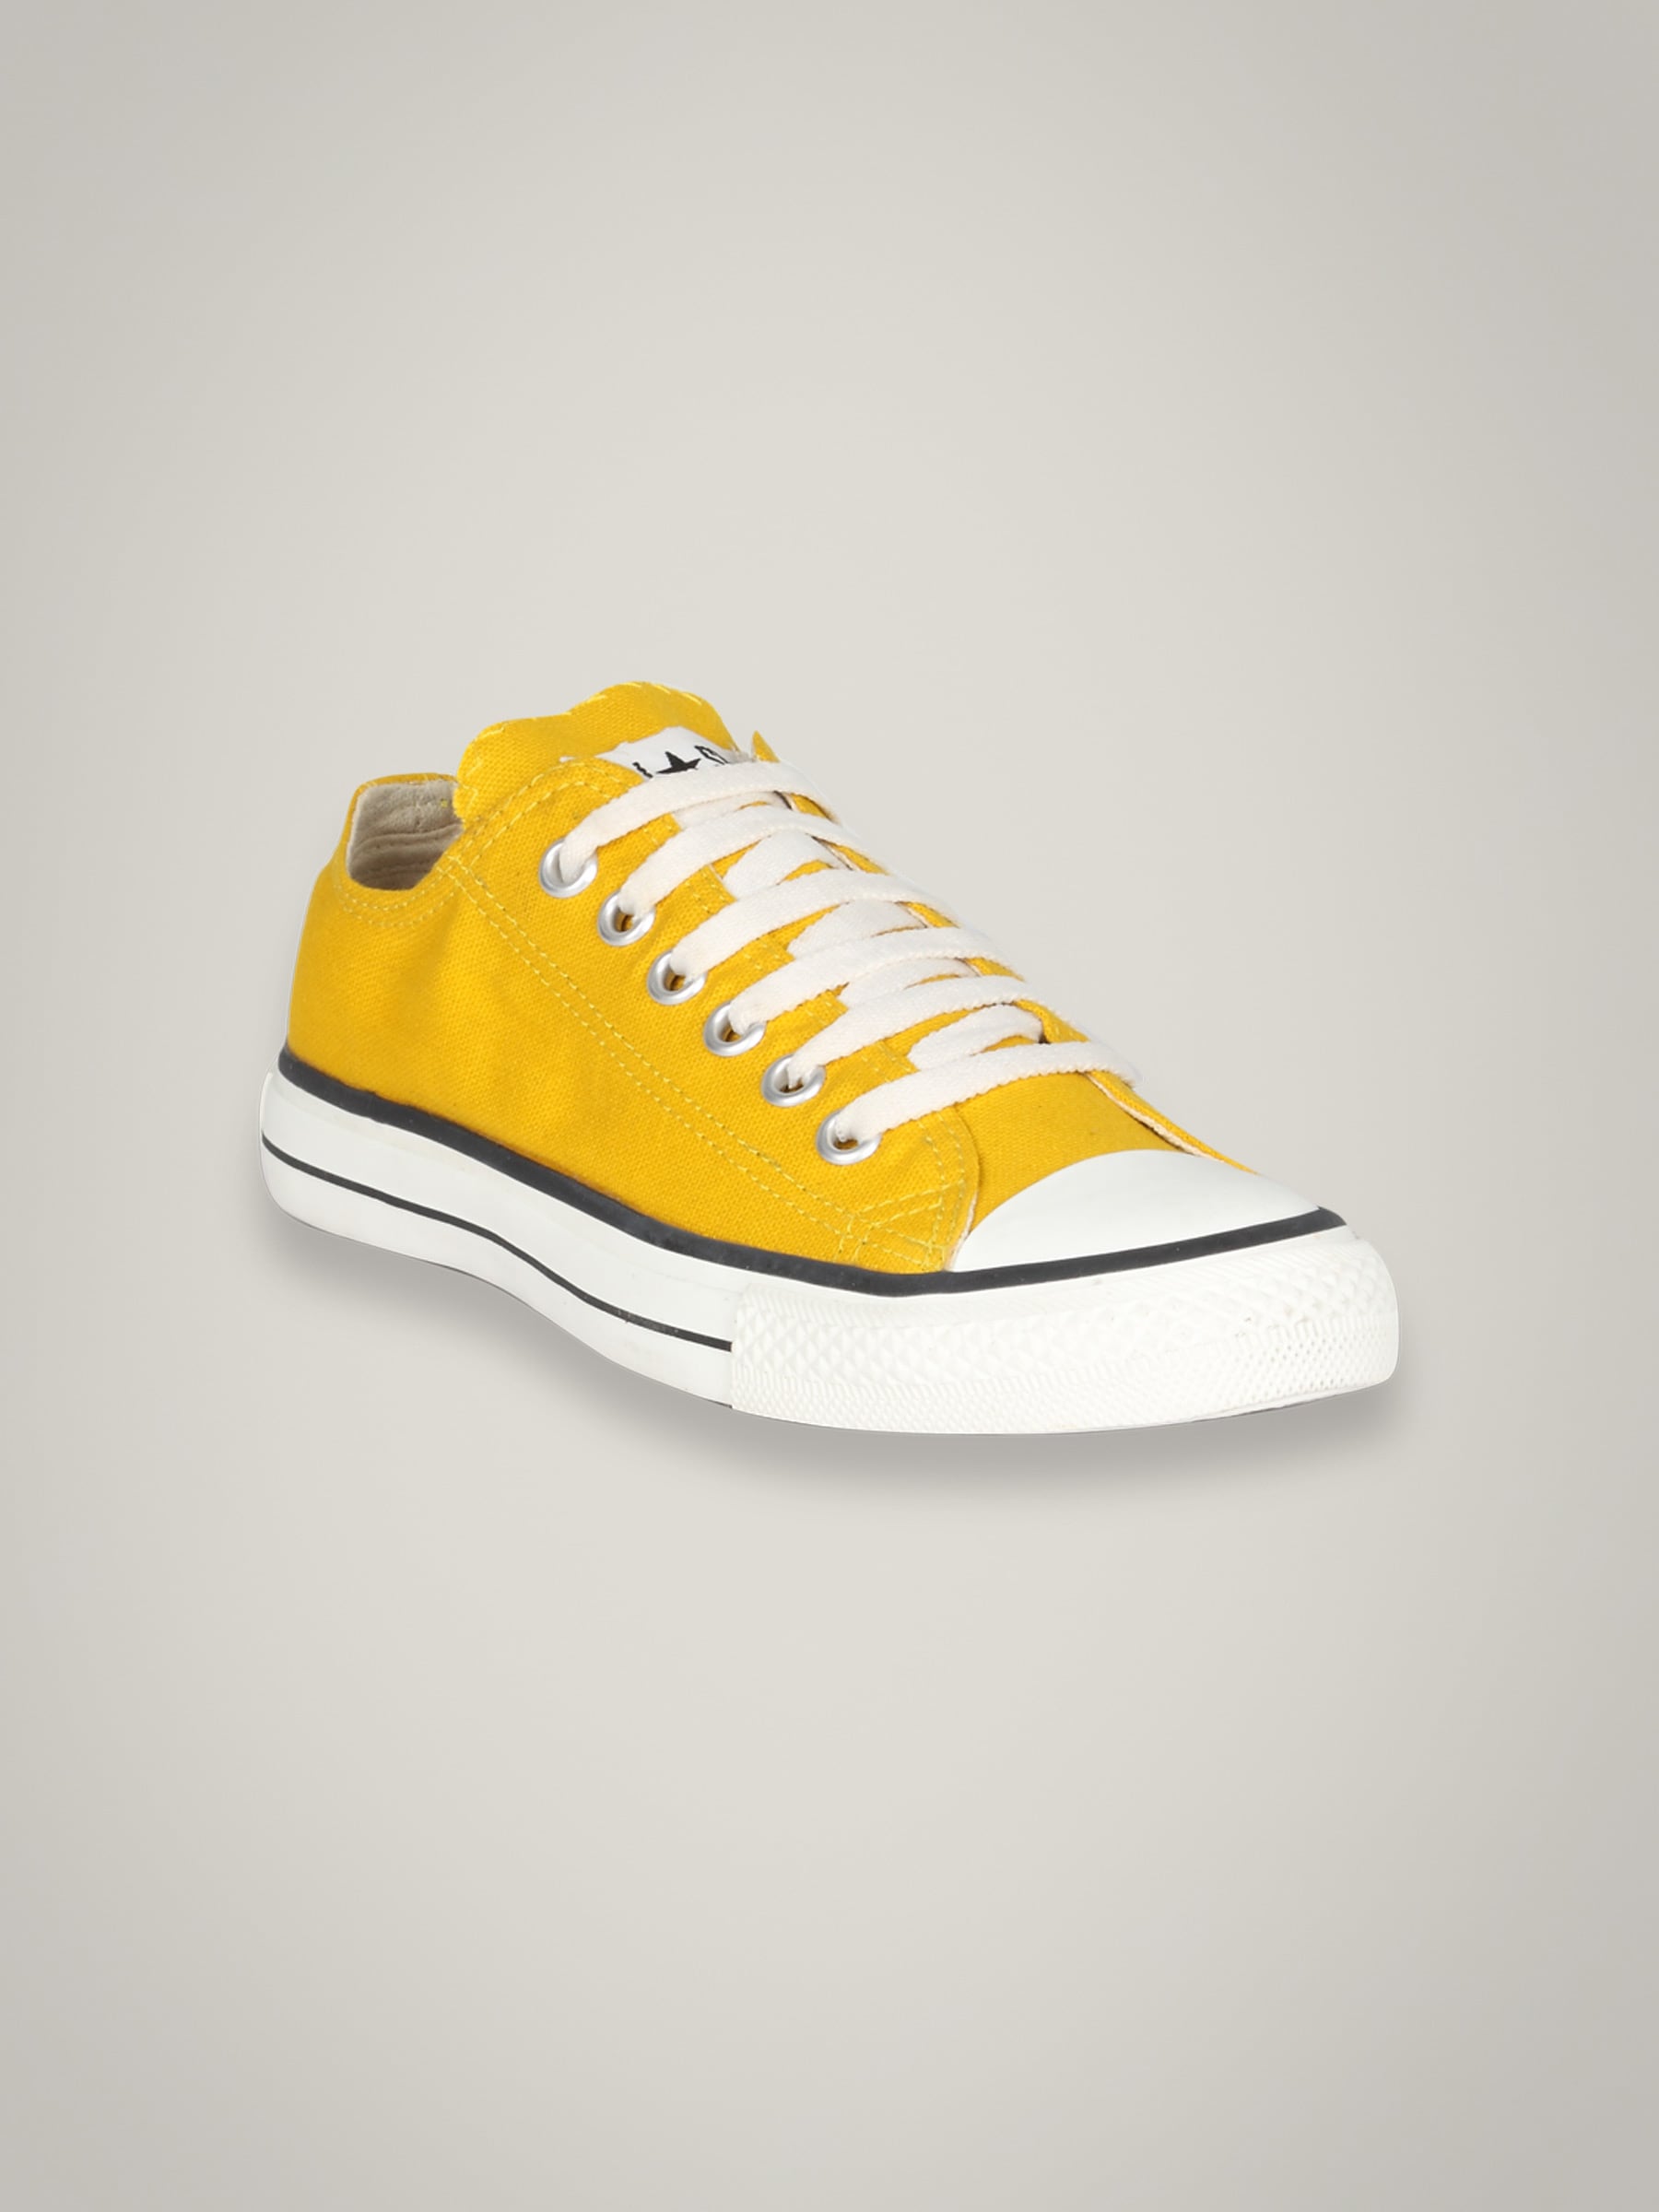 Converse Unisex Yellow Canvas Shoe